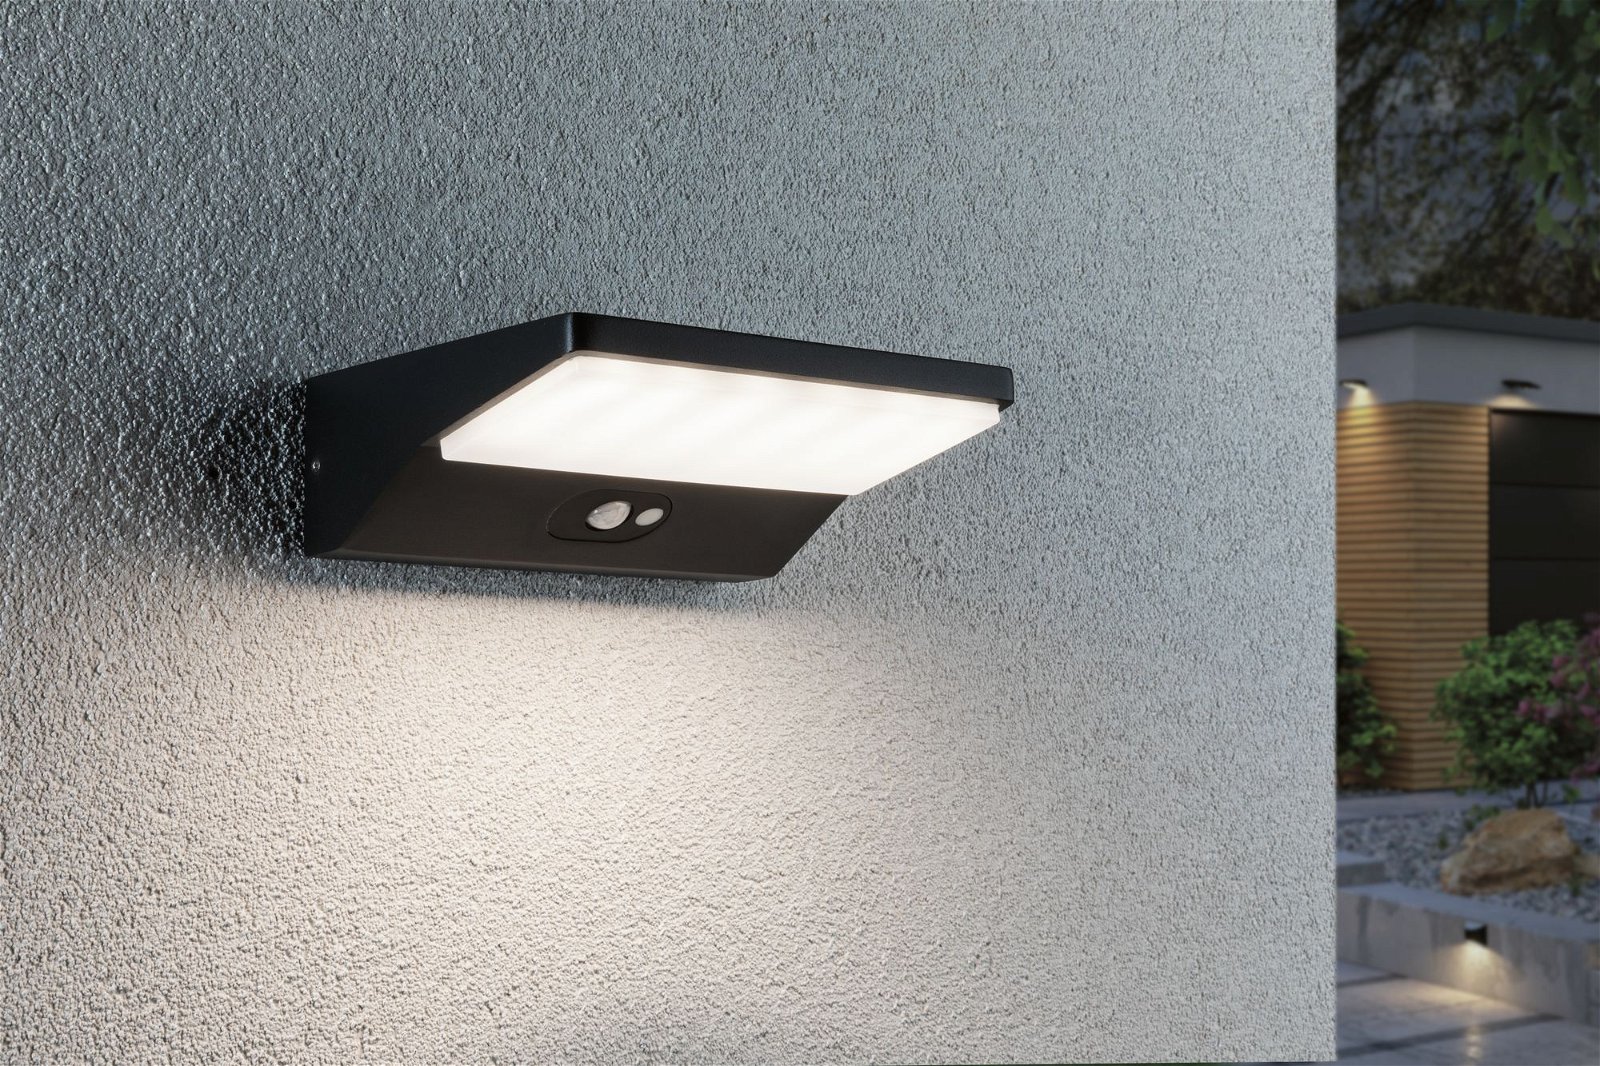 Solar LED Exterior wall luminaire Ronas Motion sensor IP44 3000K 180lm Dark grey